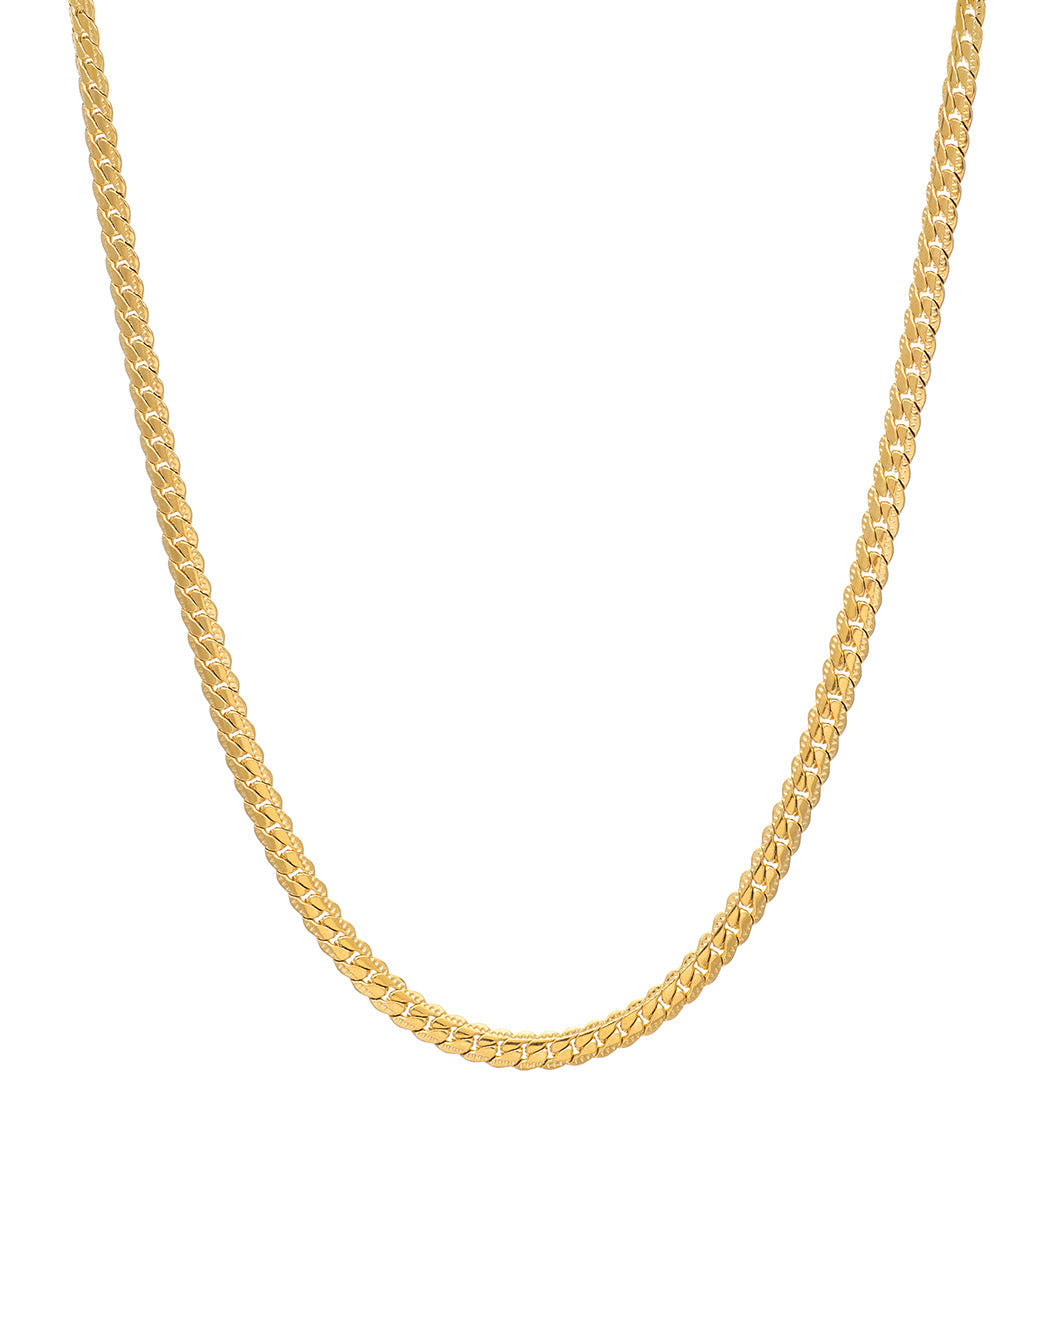 Gold Braid Chain Necklace